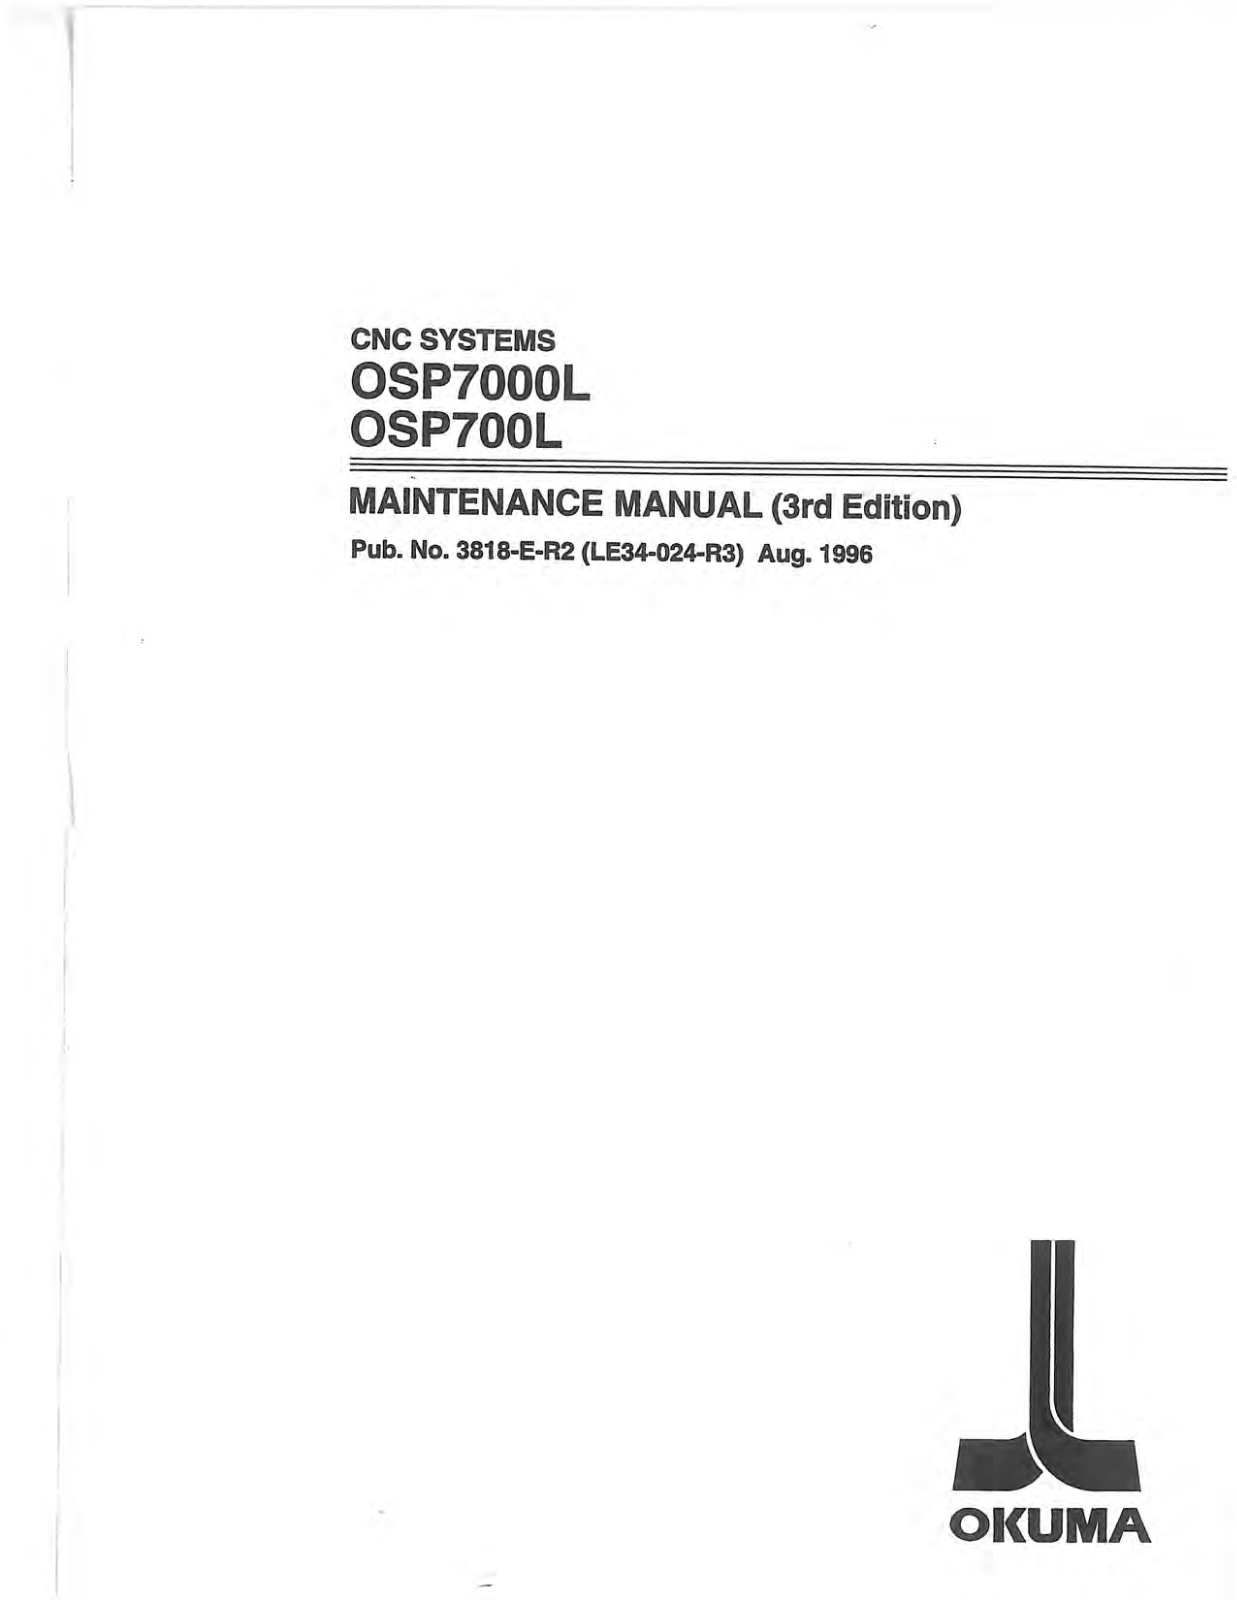 okuma OSP7000L, OSP700L Maintenance Manual